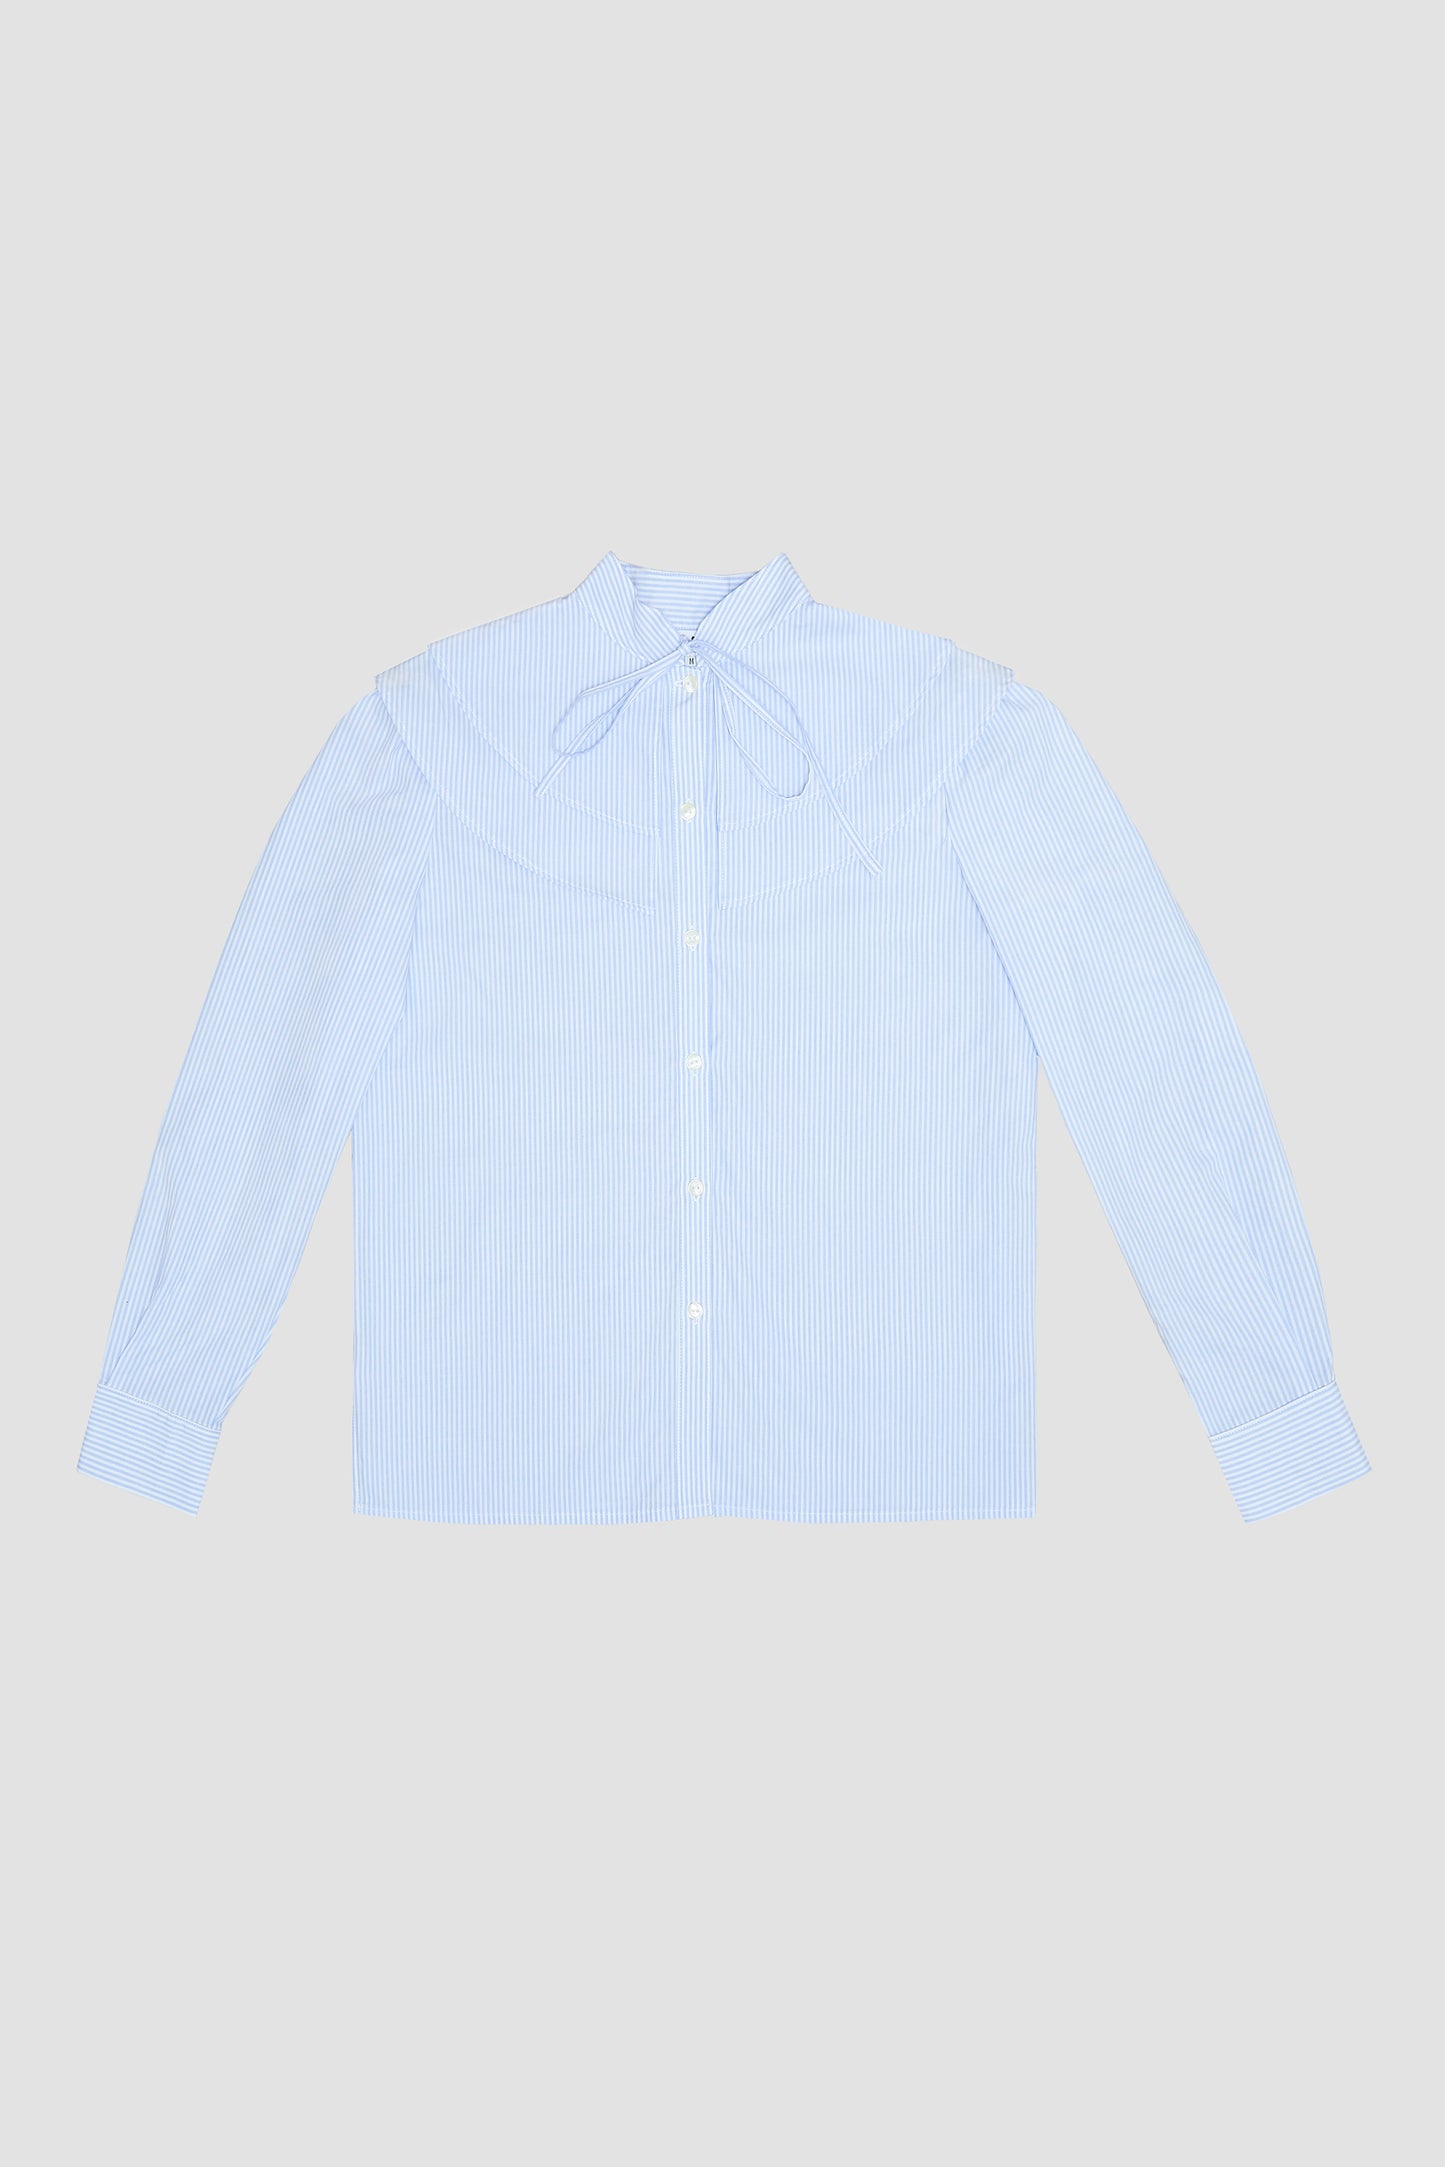 Double Collar Shirt Blue 01